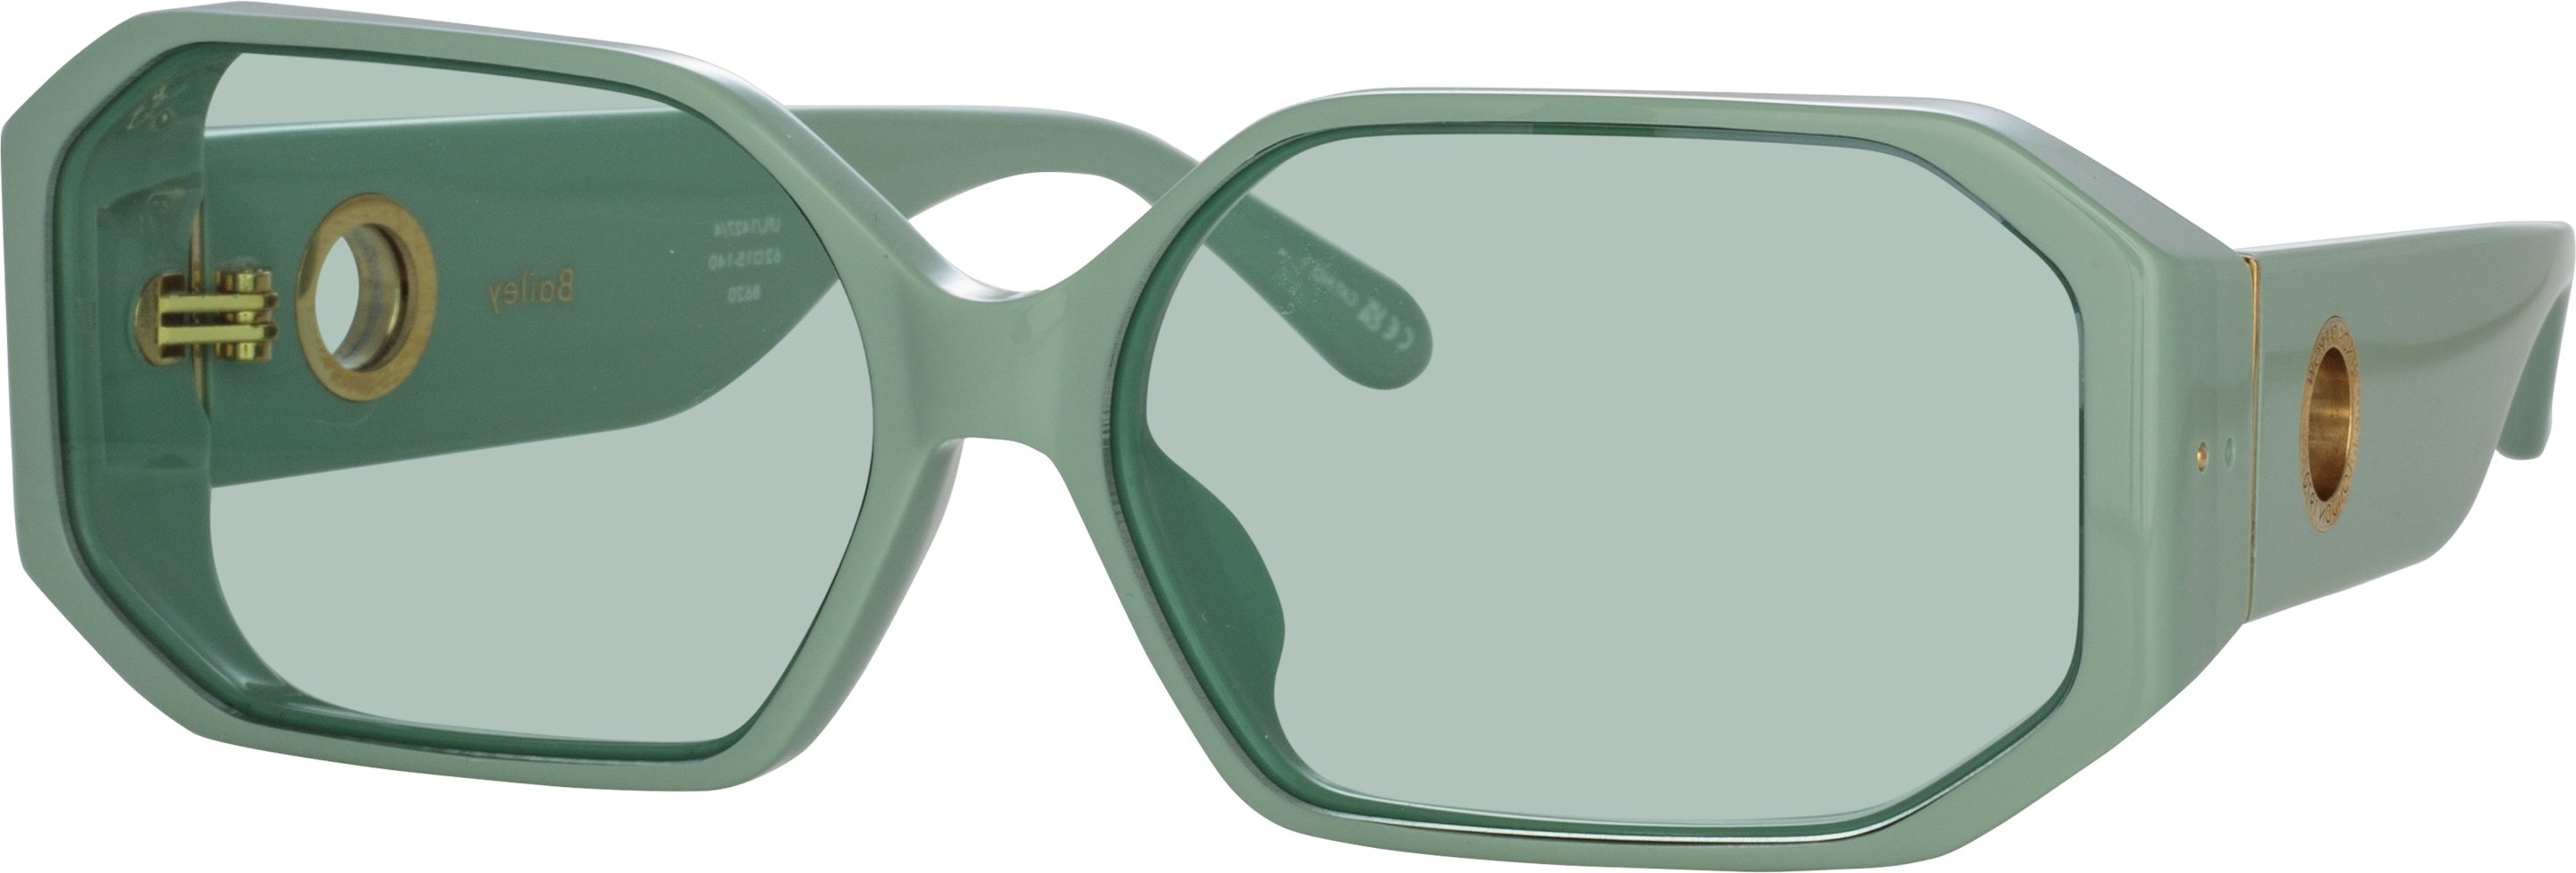 Color_LFL1427C4SUN - Bailey Angular Sunglasses in Peppermint